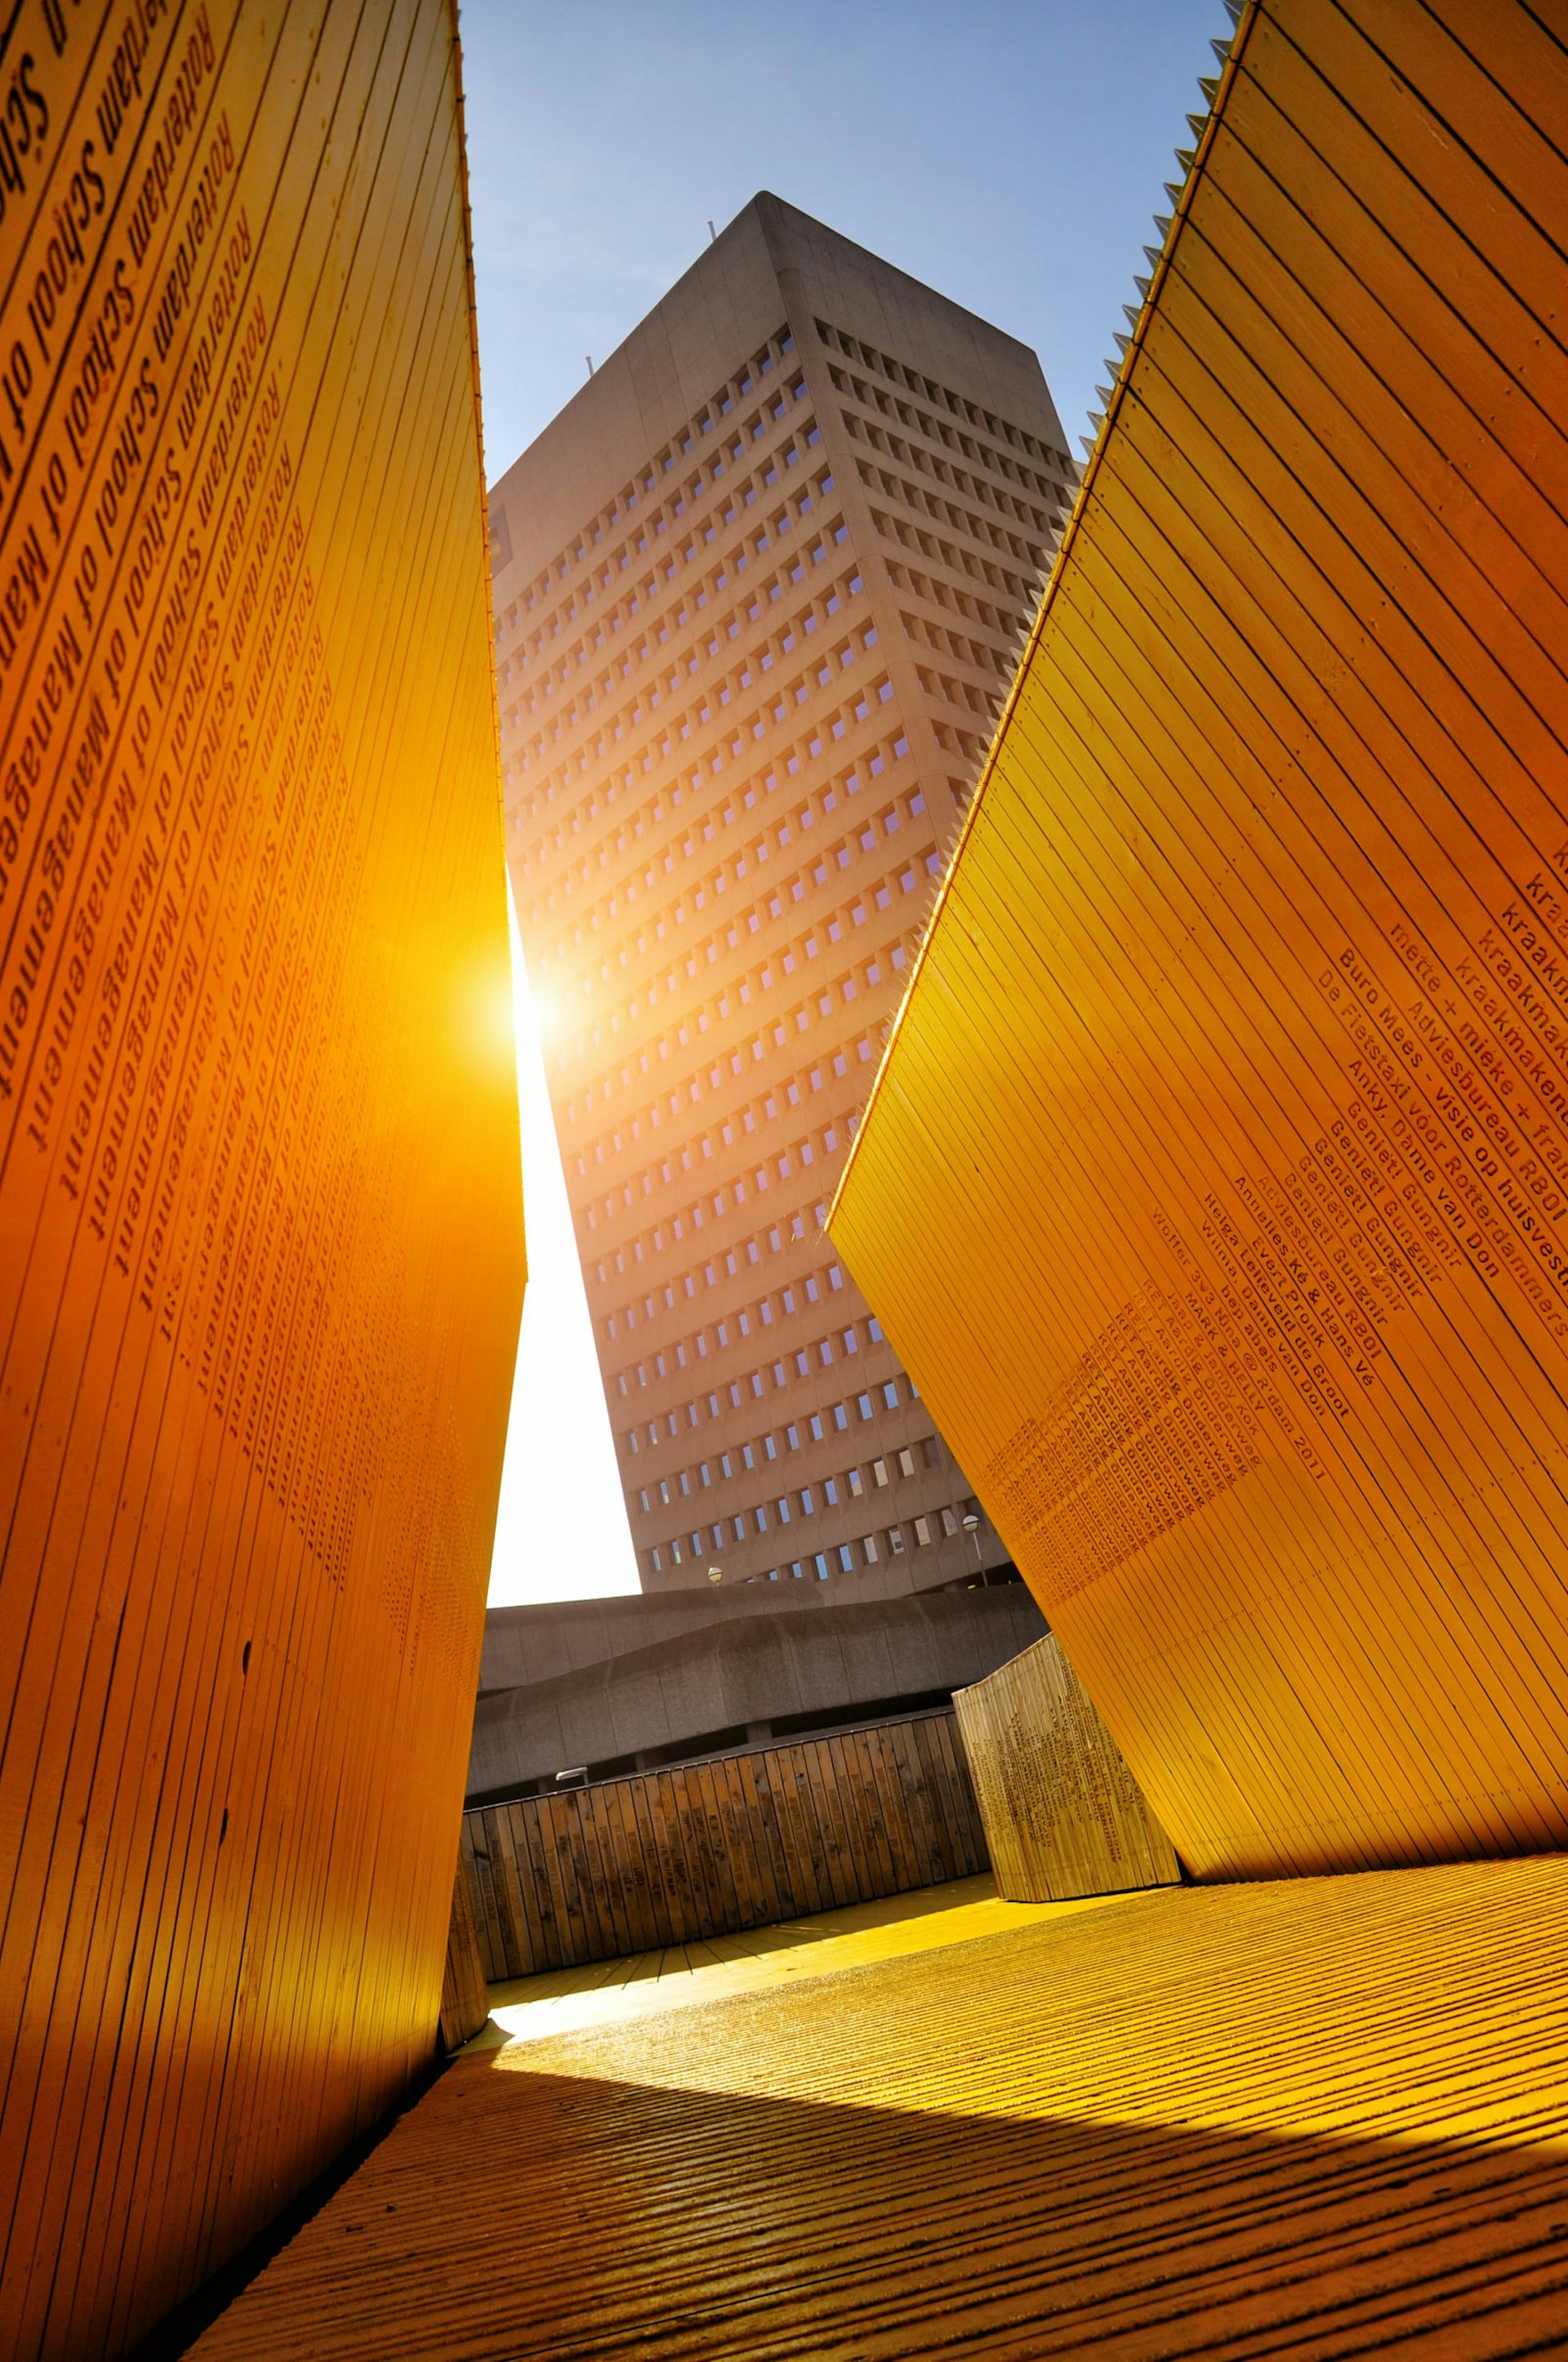 A skyscraper as seen from the bright yellow Luchtsingel pedestrian bridge in Rotterdam